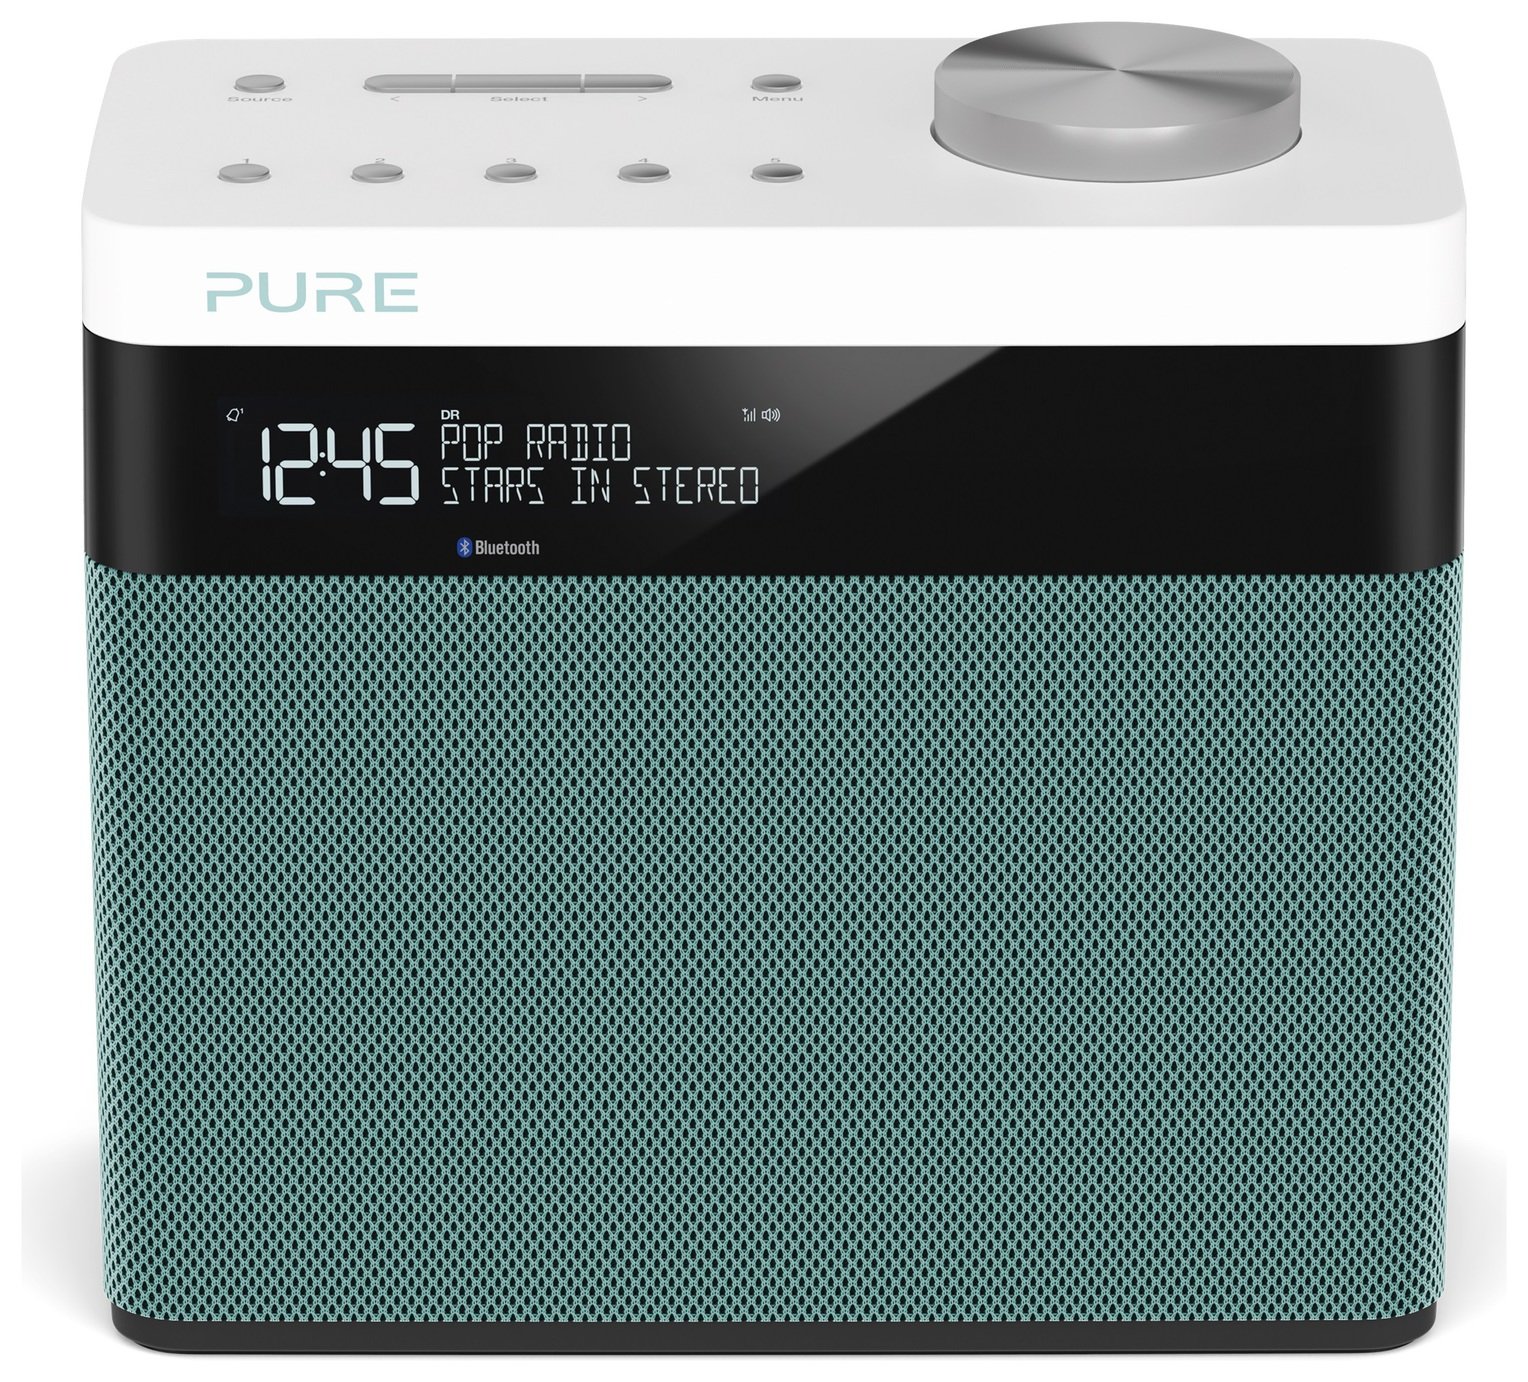 Pure Pop Maxi S Portable Radio review